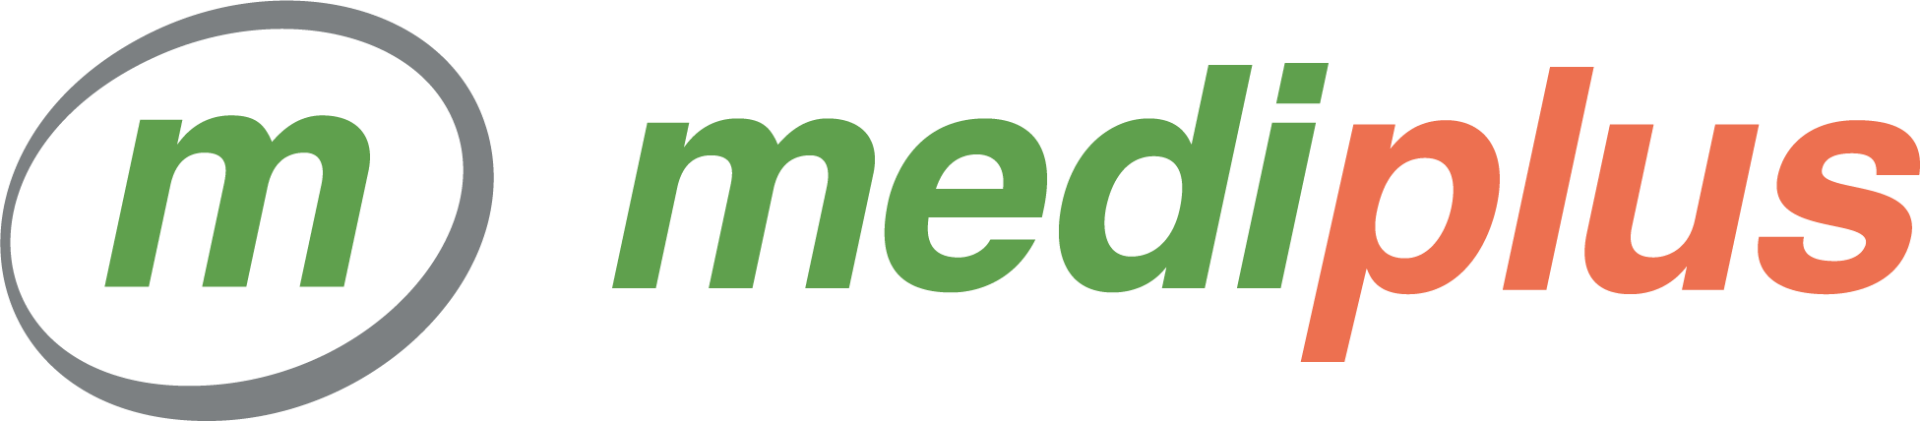 Mediplus Company Logo